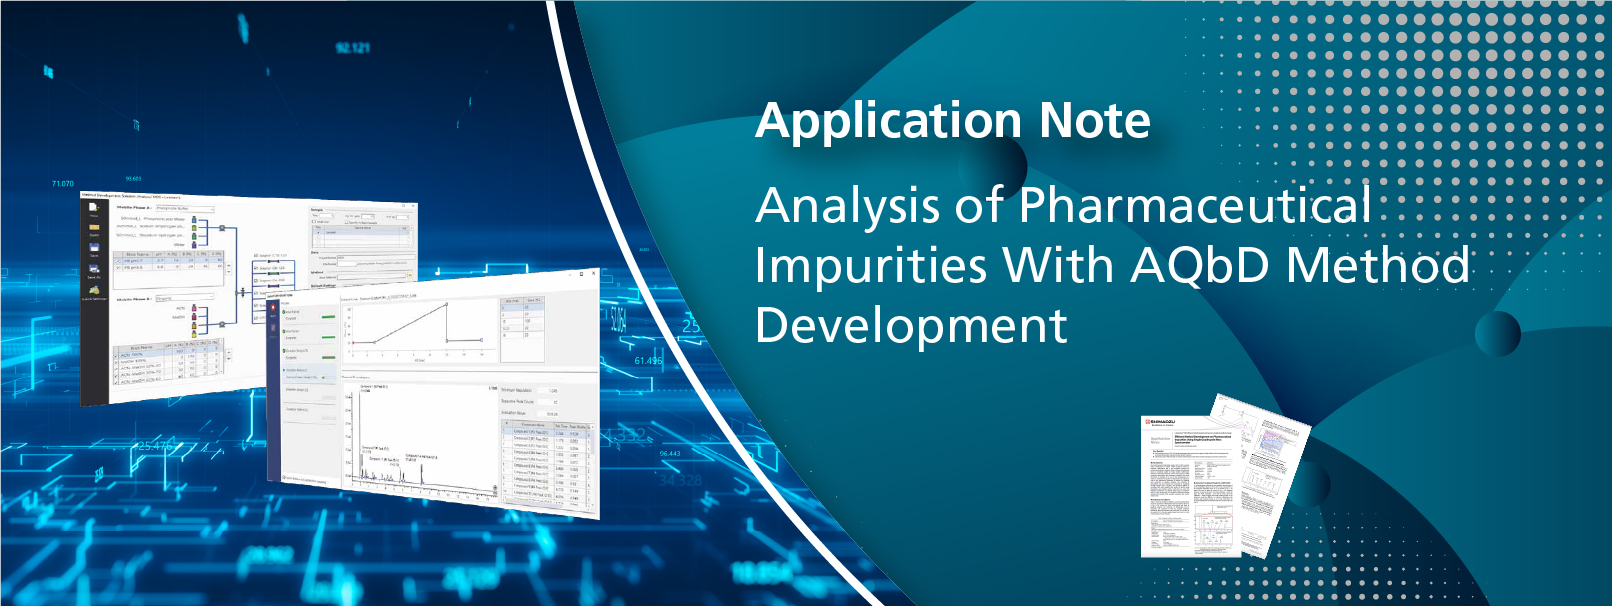 Analysis of Pharmaceutical Impurities with AQbD Method Development